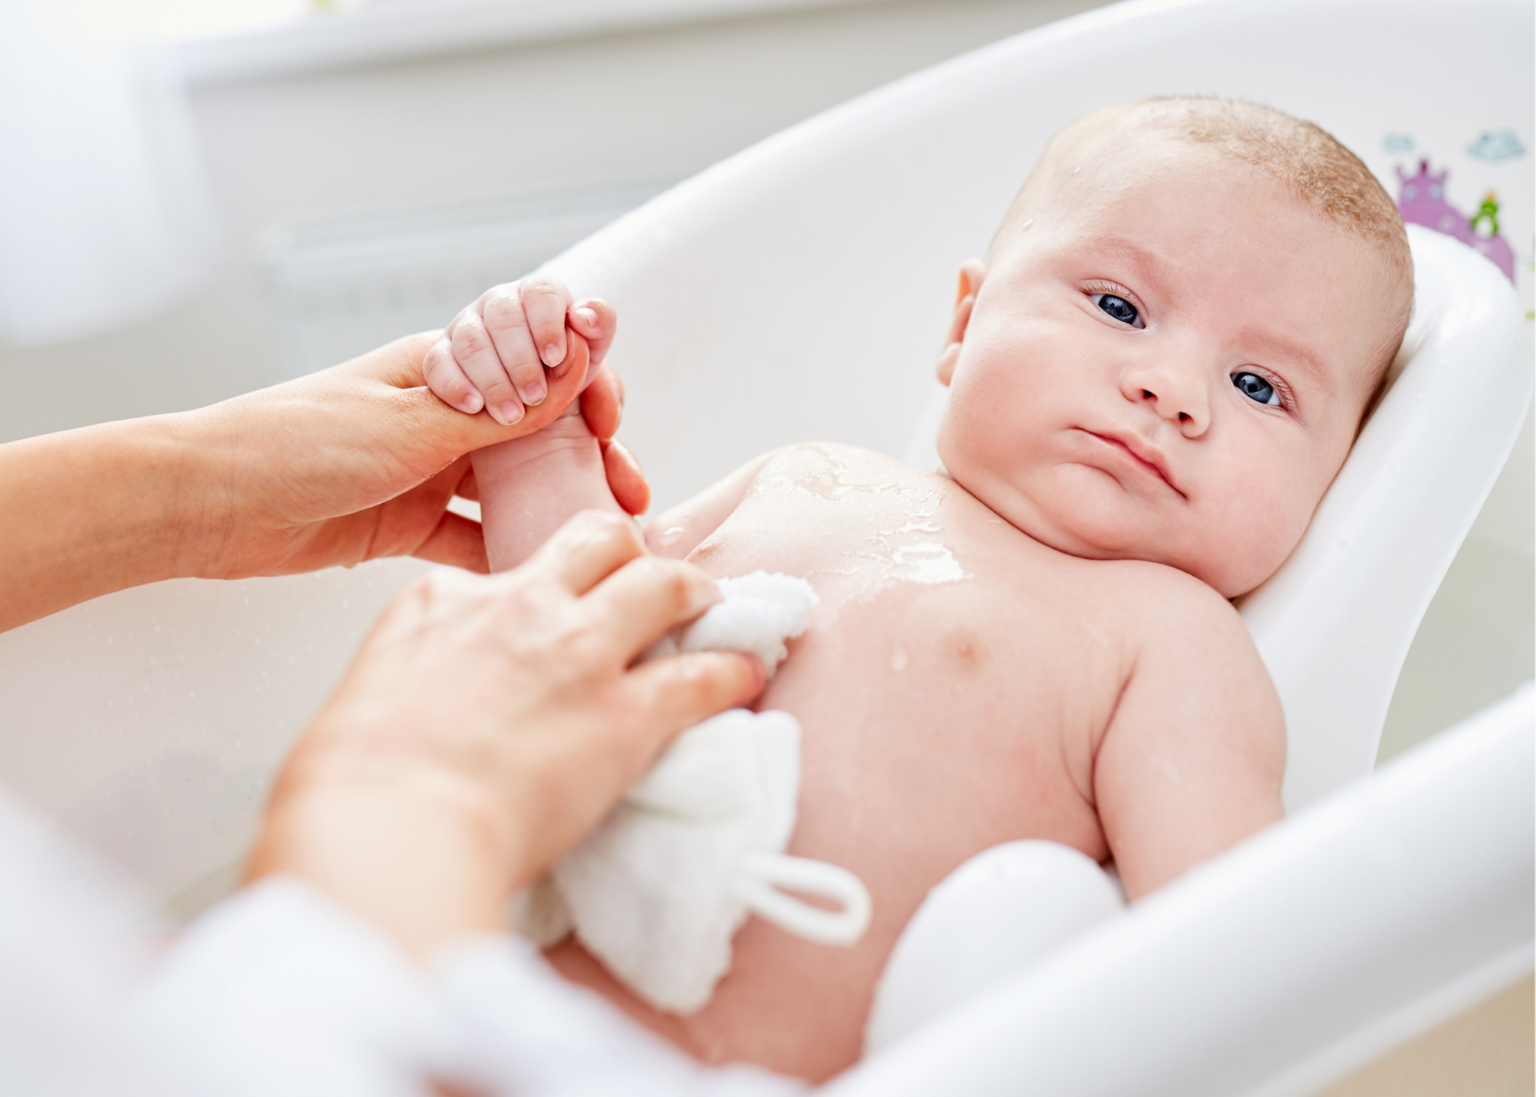 How often do you bathe a newborn?